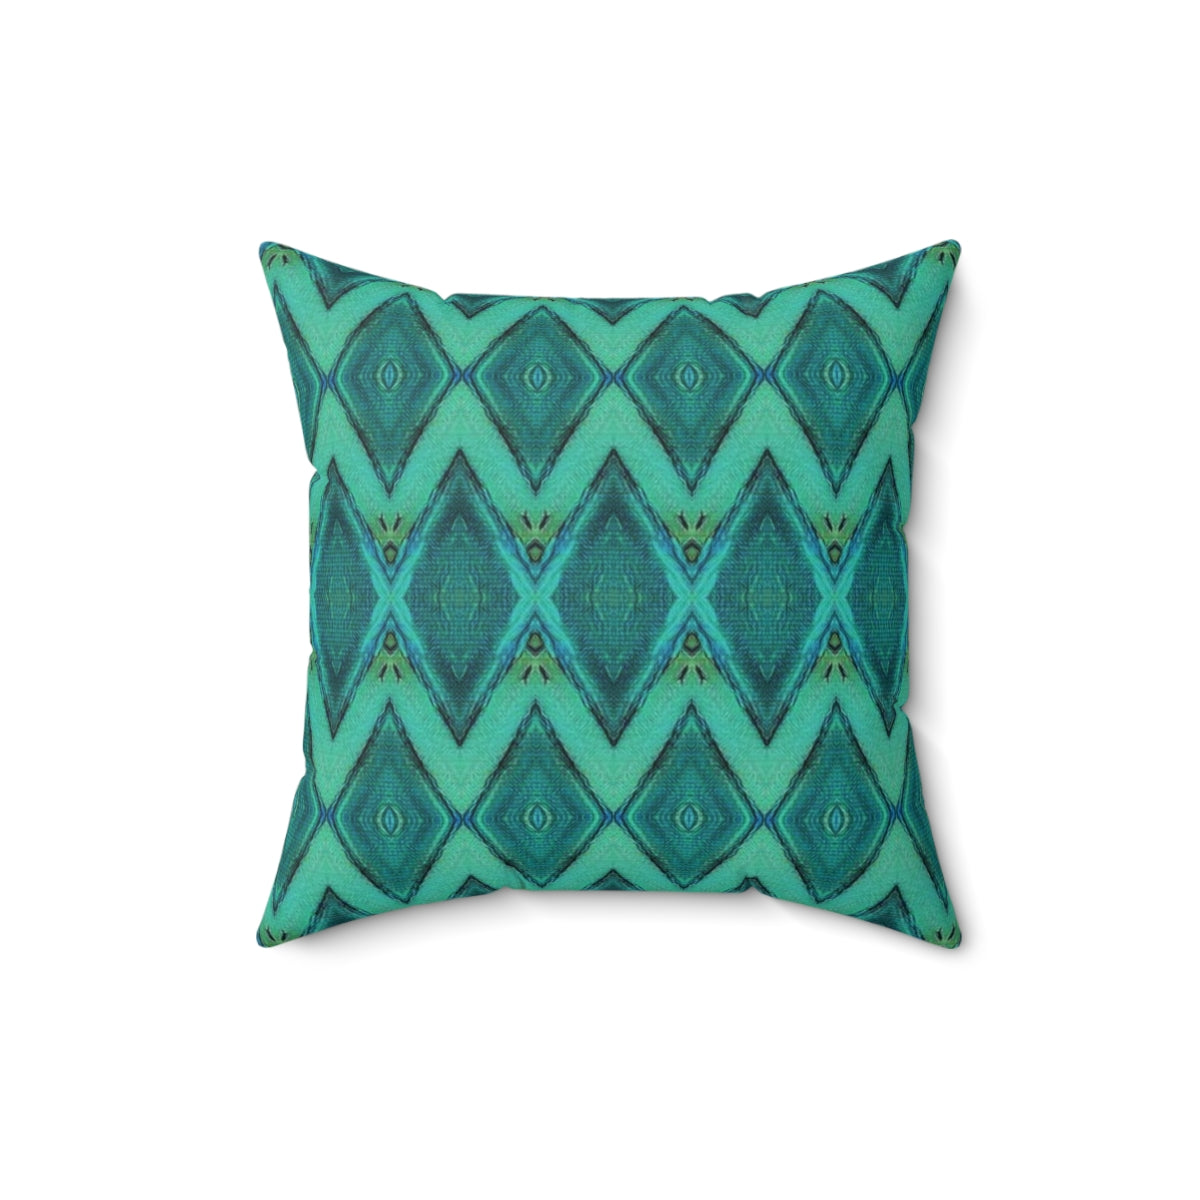 Aqua Blue throw pillow with diamond pattern